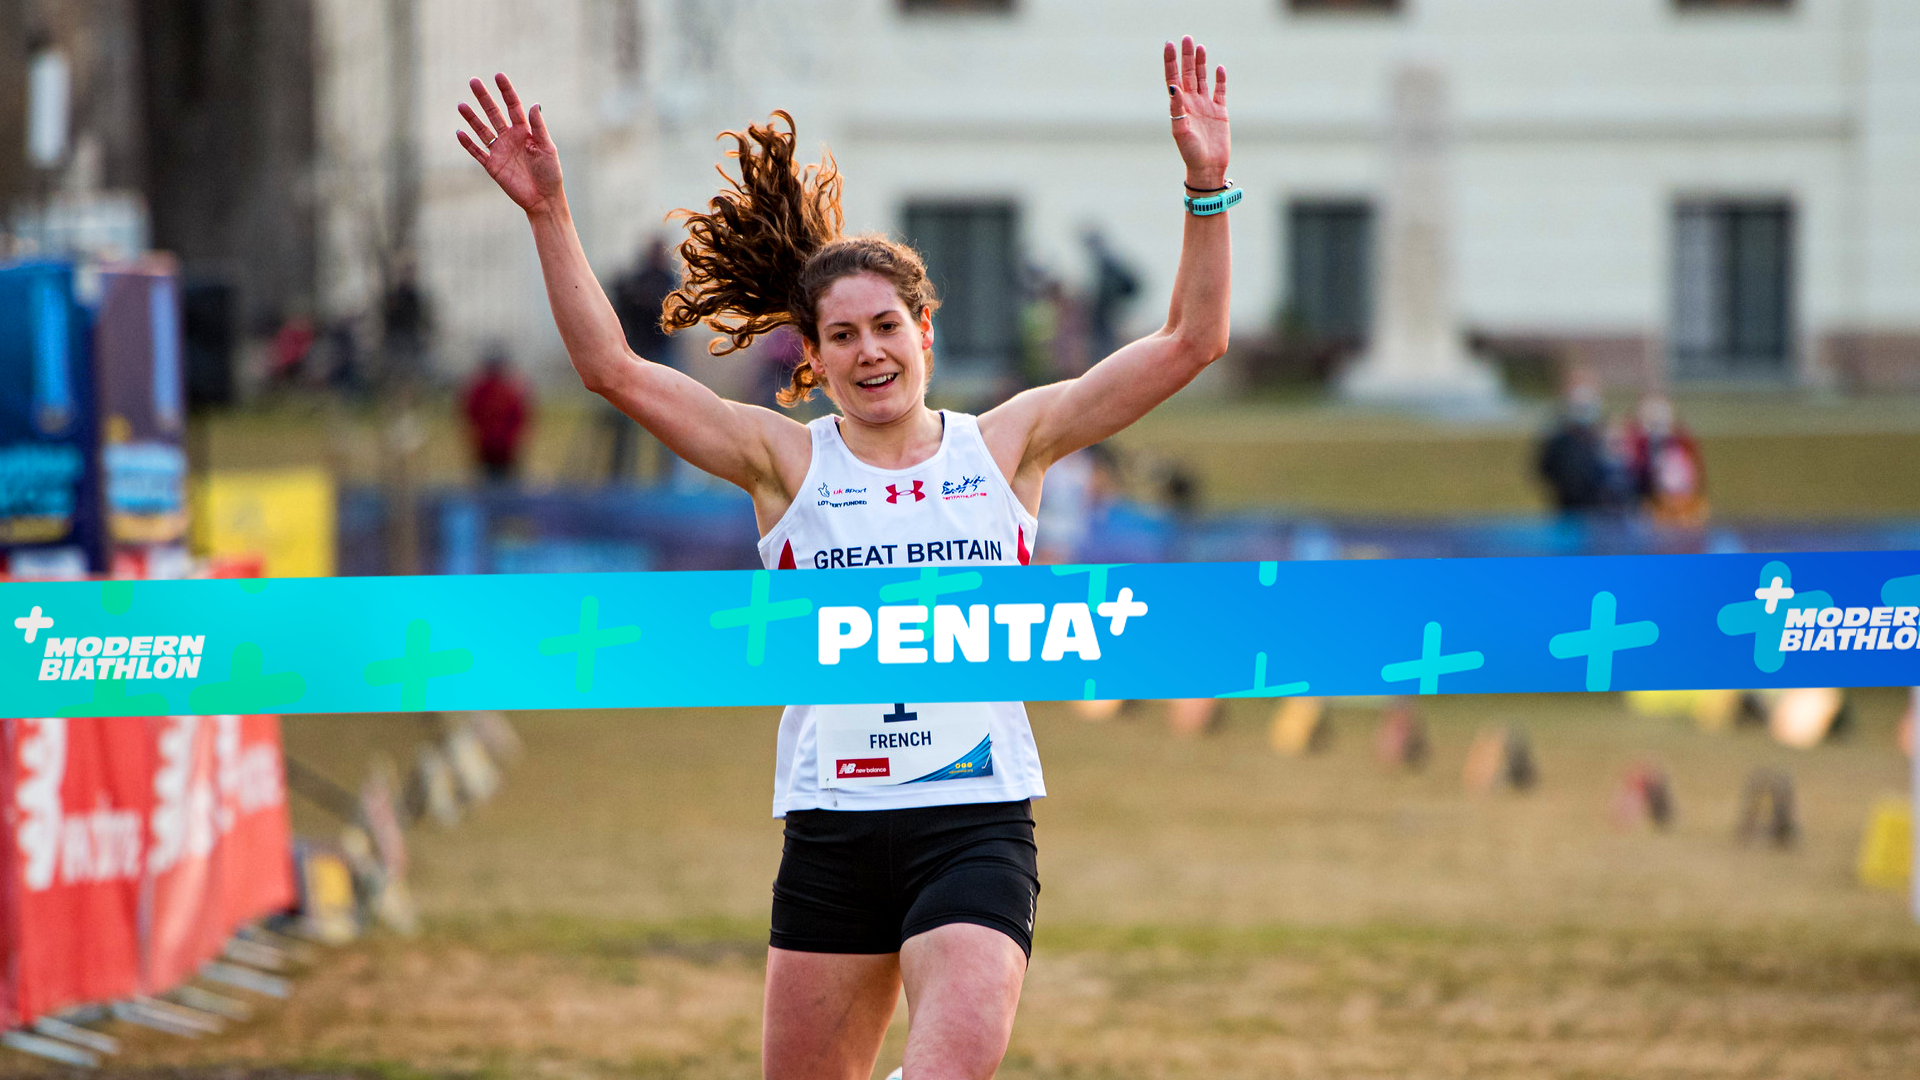 Pentathlon GB Launches Penta+, the New Multi-Sports Brand to